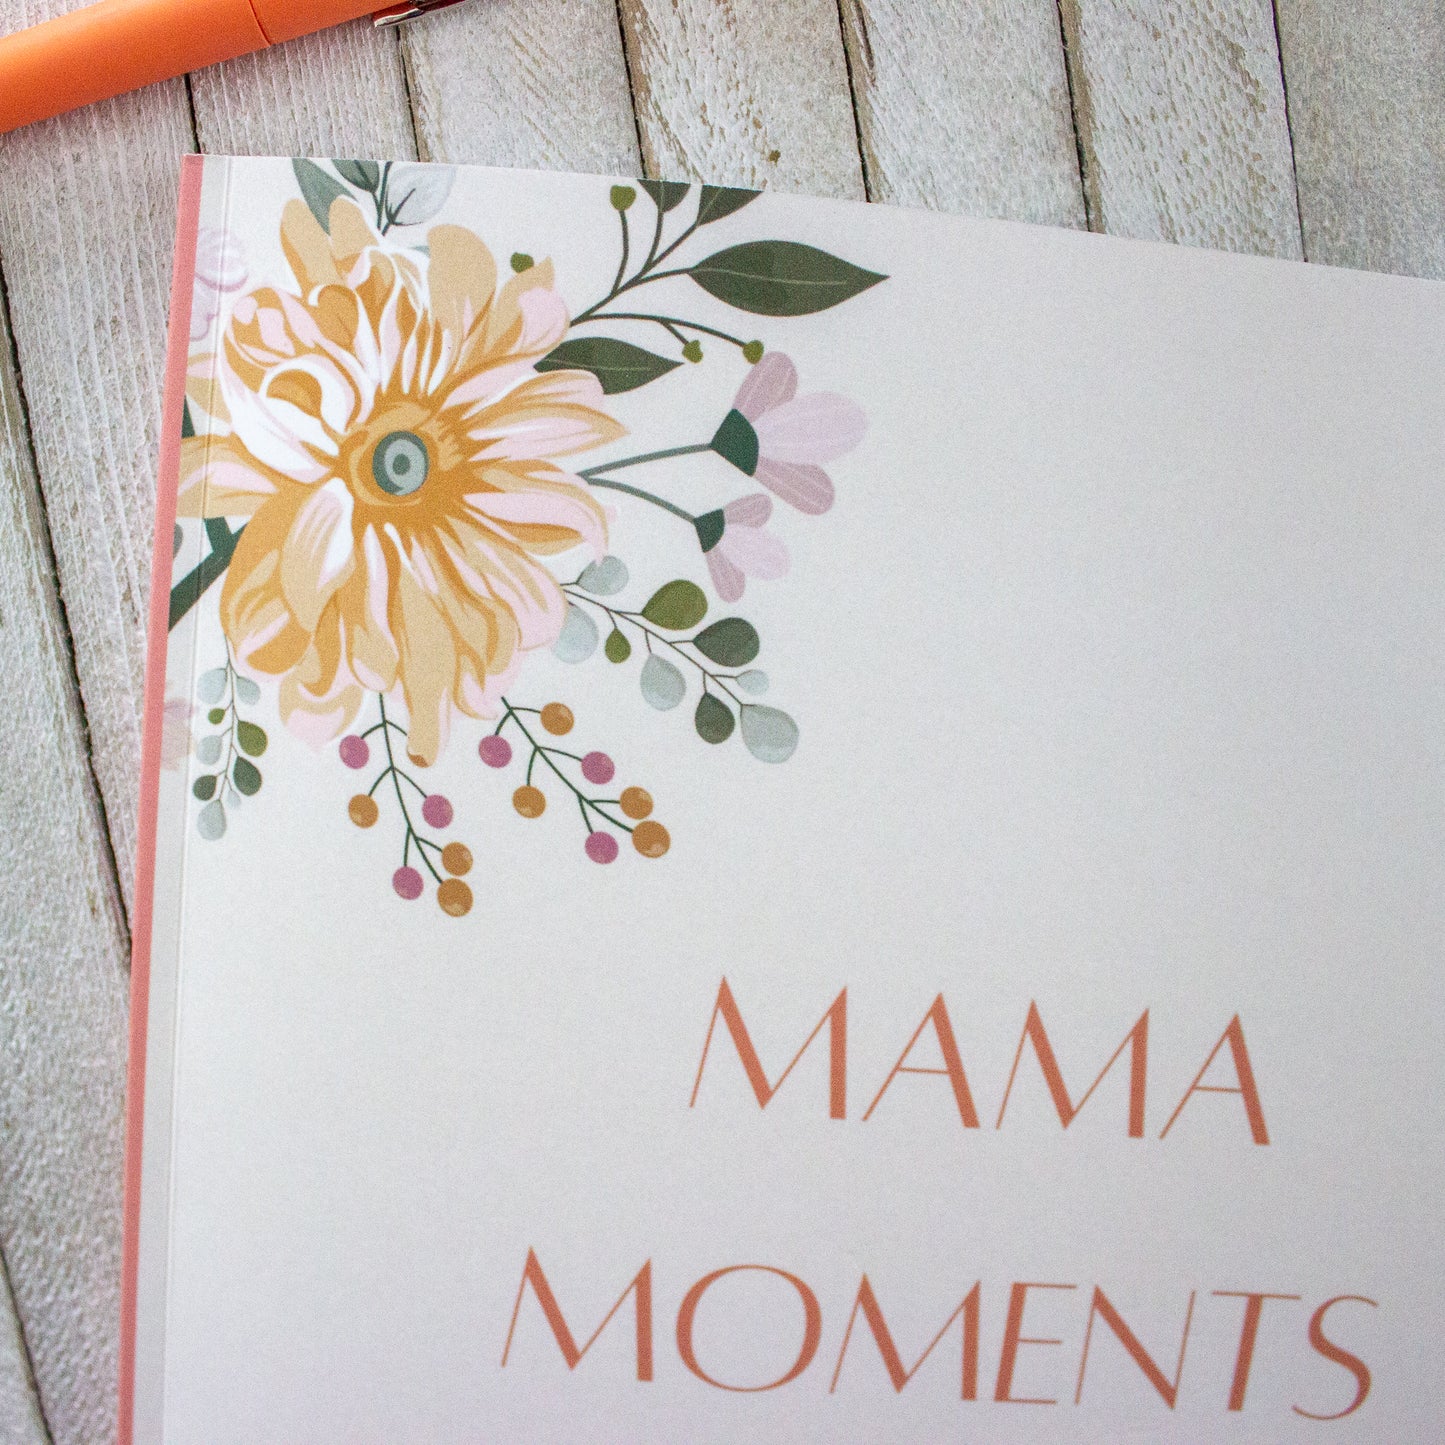 Mama Moments Journal